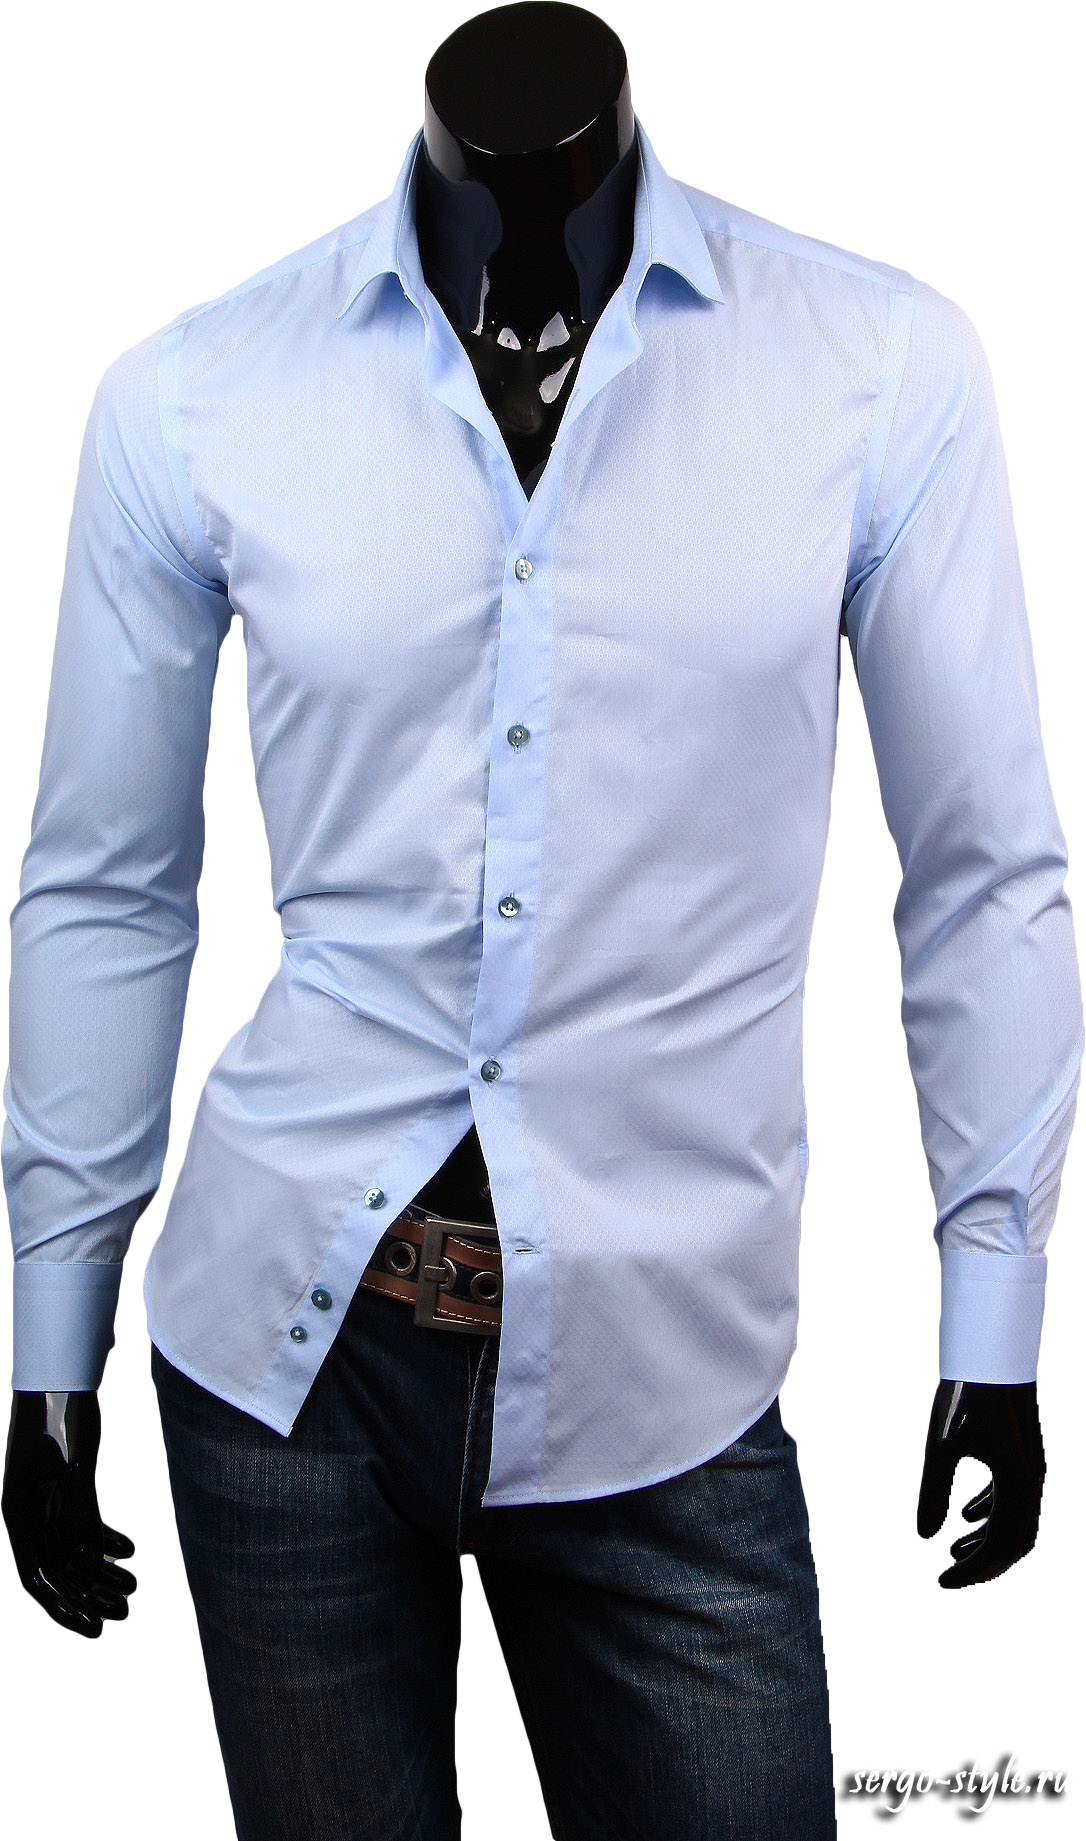 Приталенные мужские рубашки Venturo артикул 2602-20